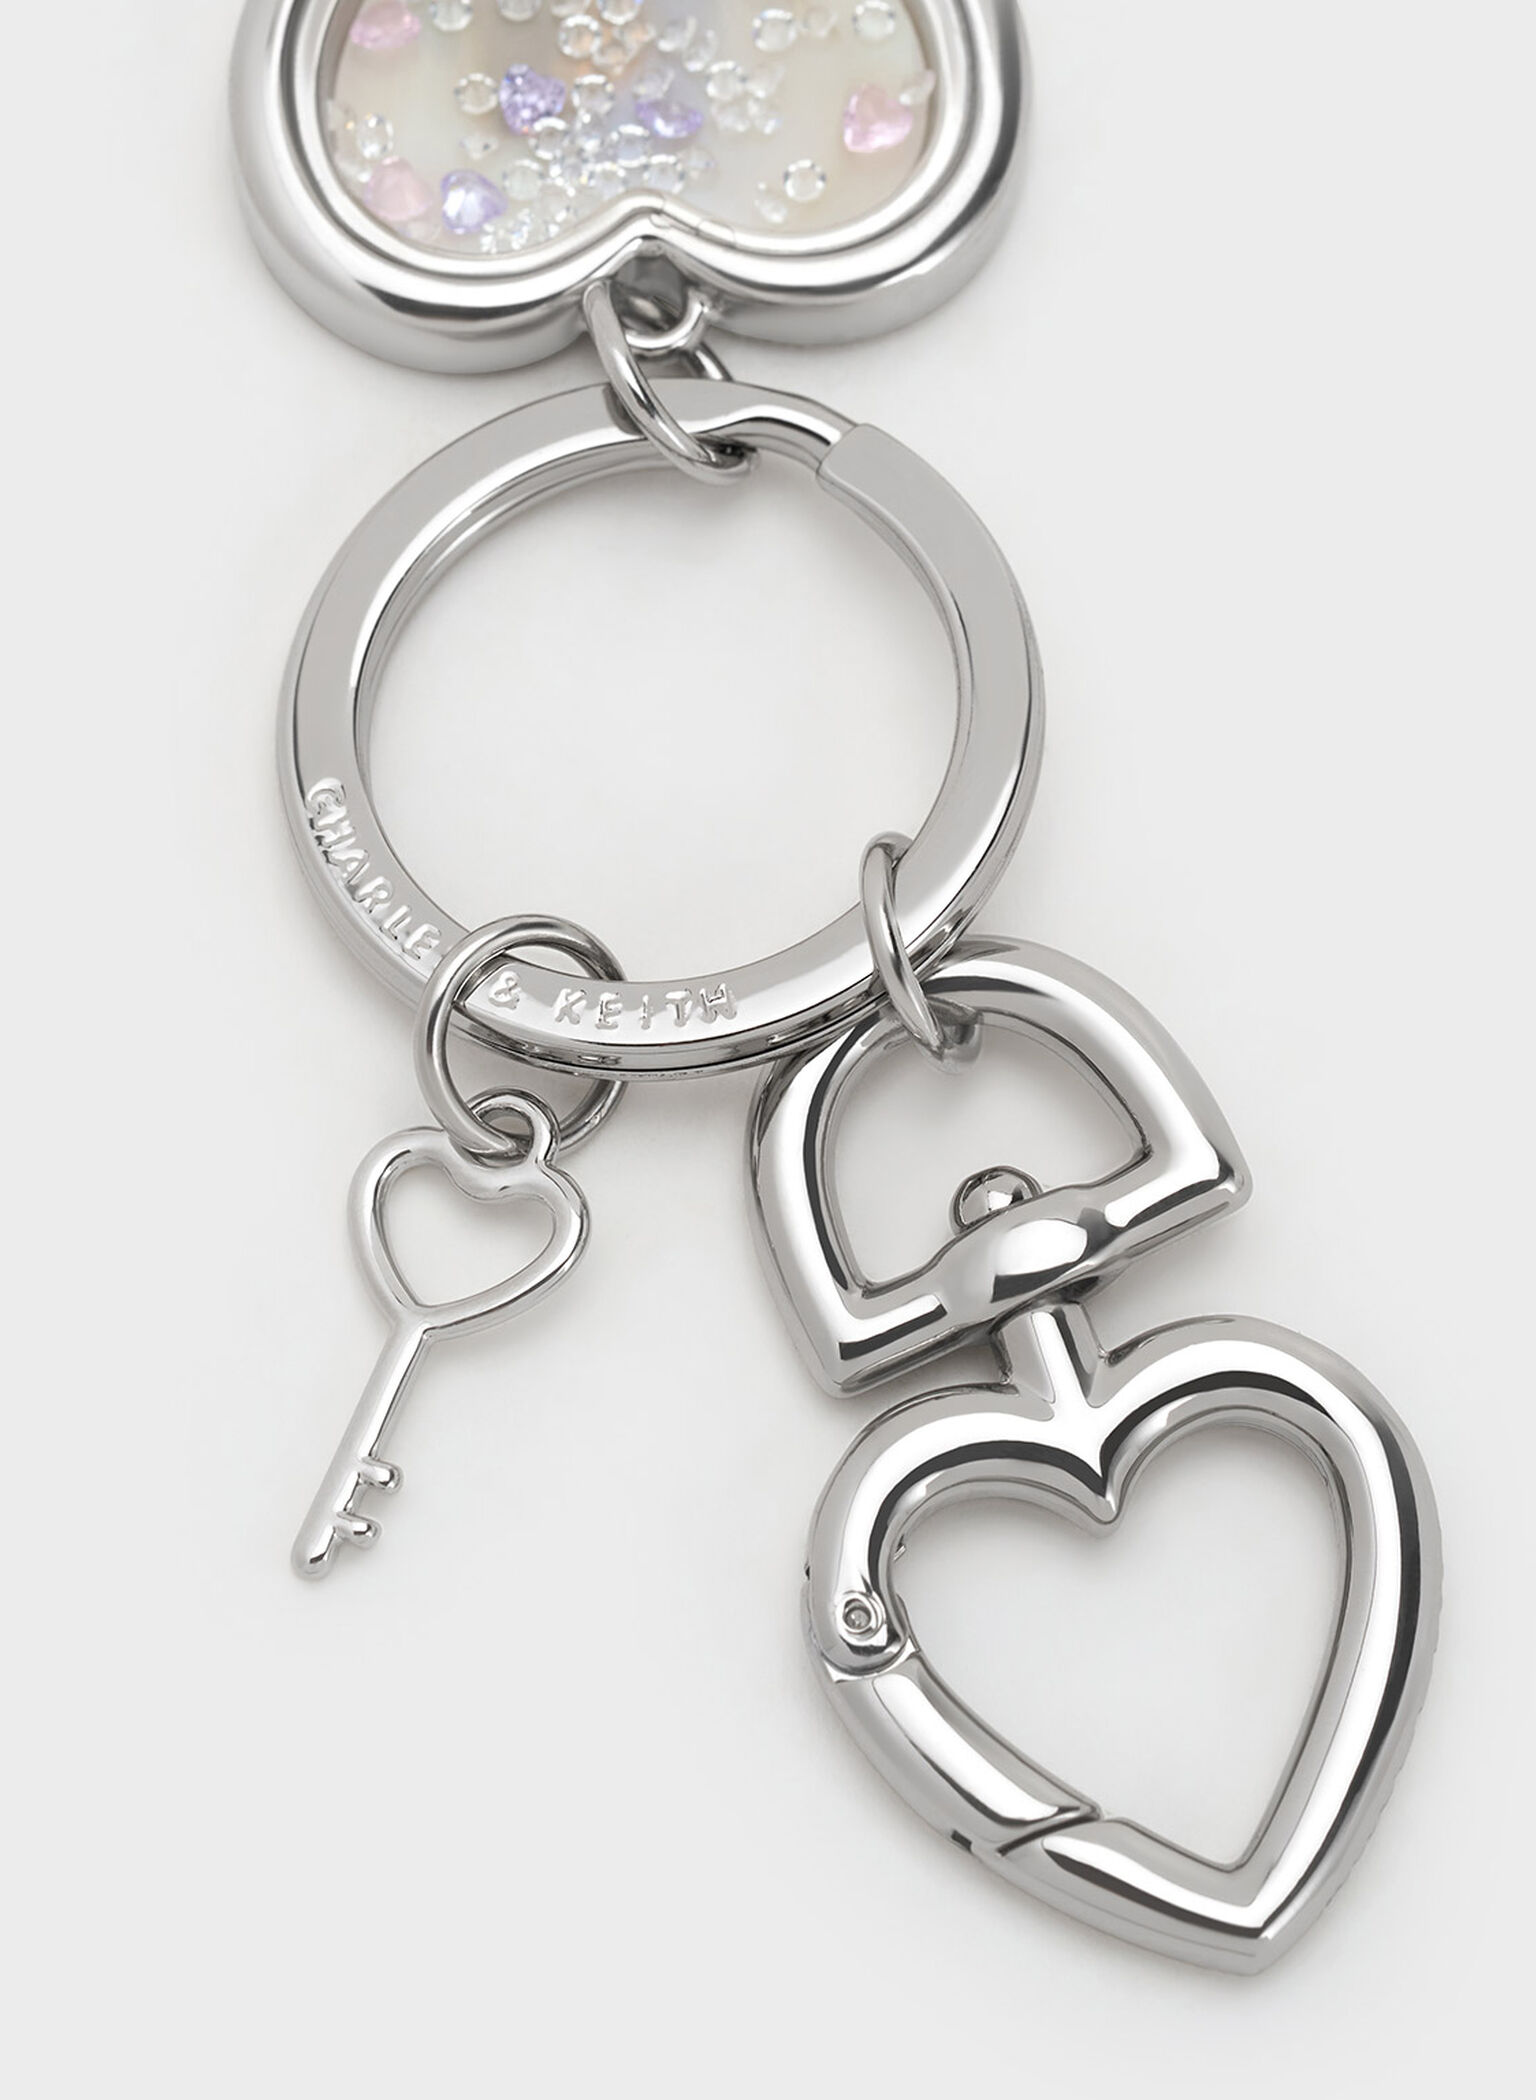 Porte-clés en cristal à cadenas en forme de cœur or - CHARLES & KEITH FR